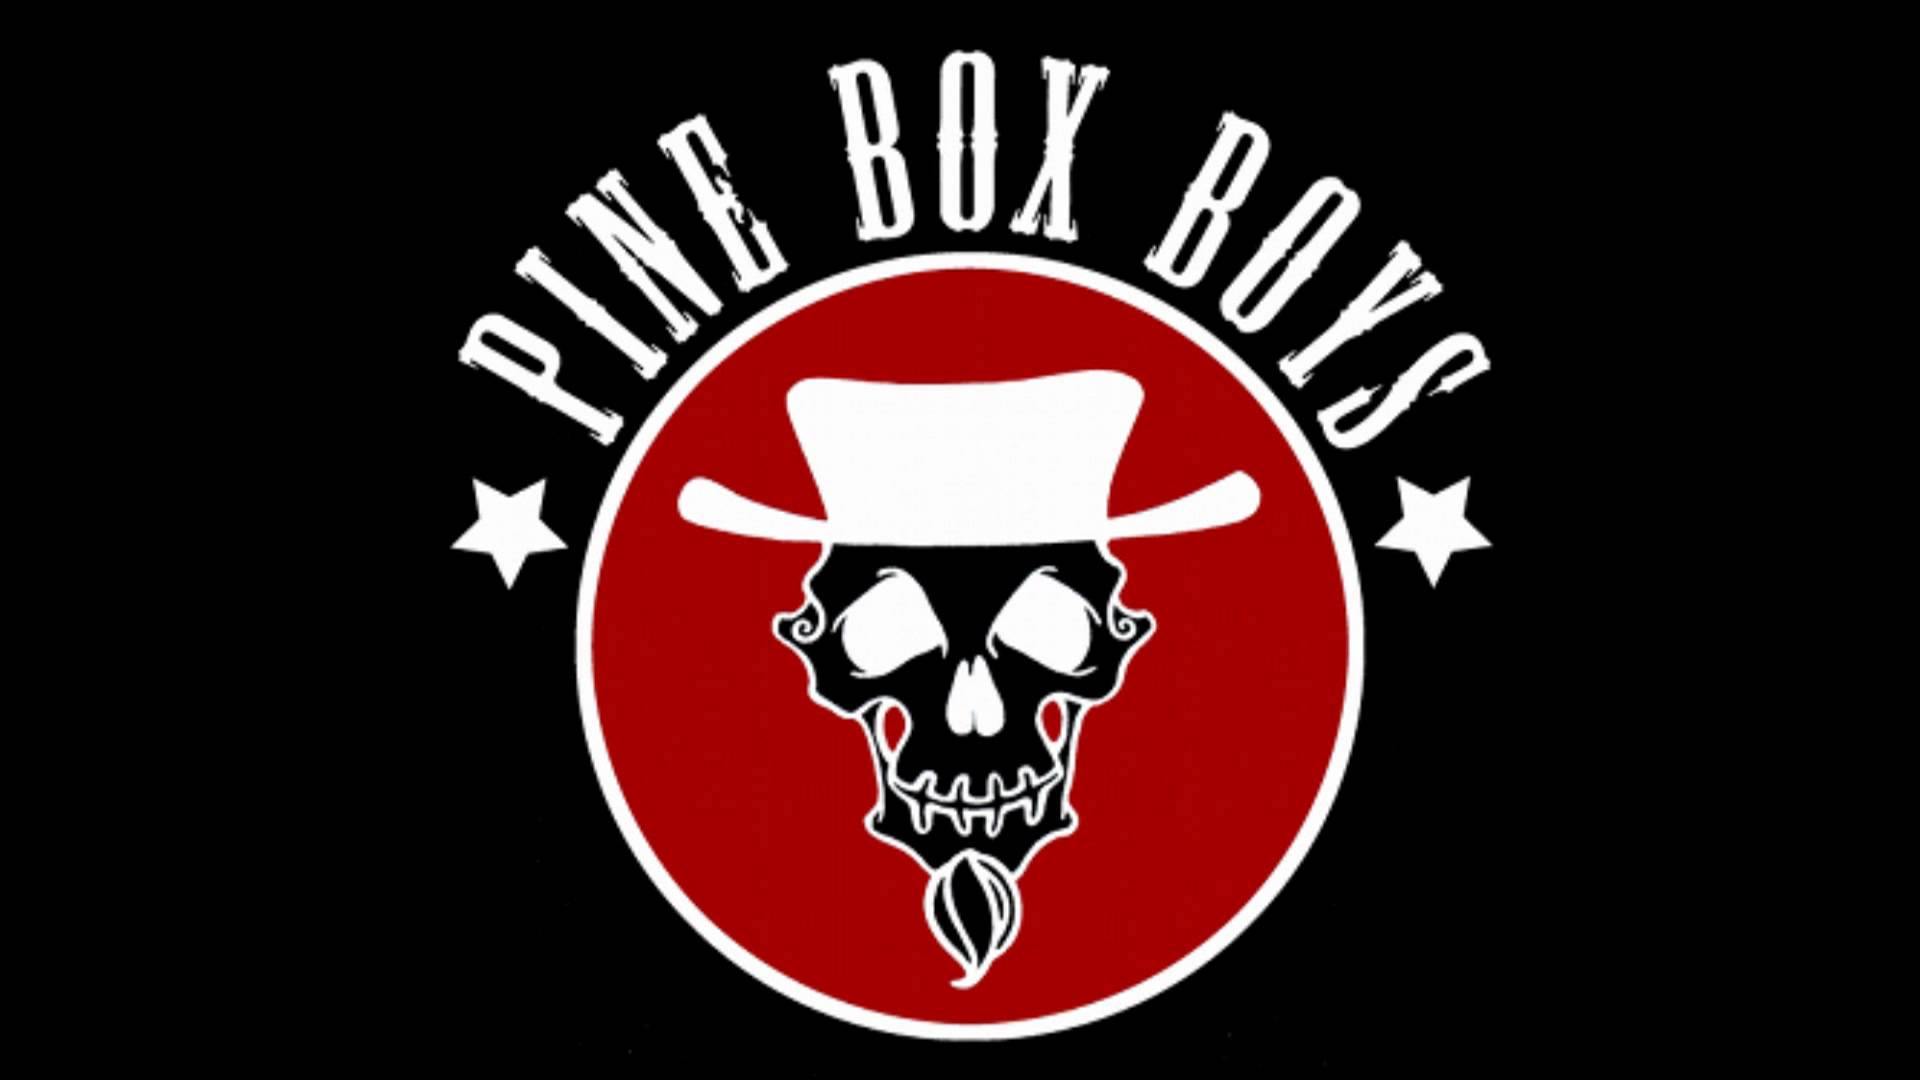 Pine Box Boys logo